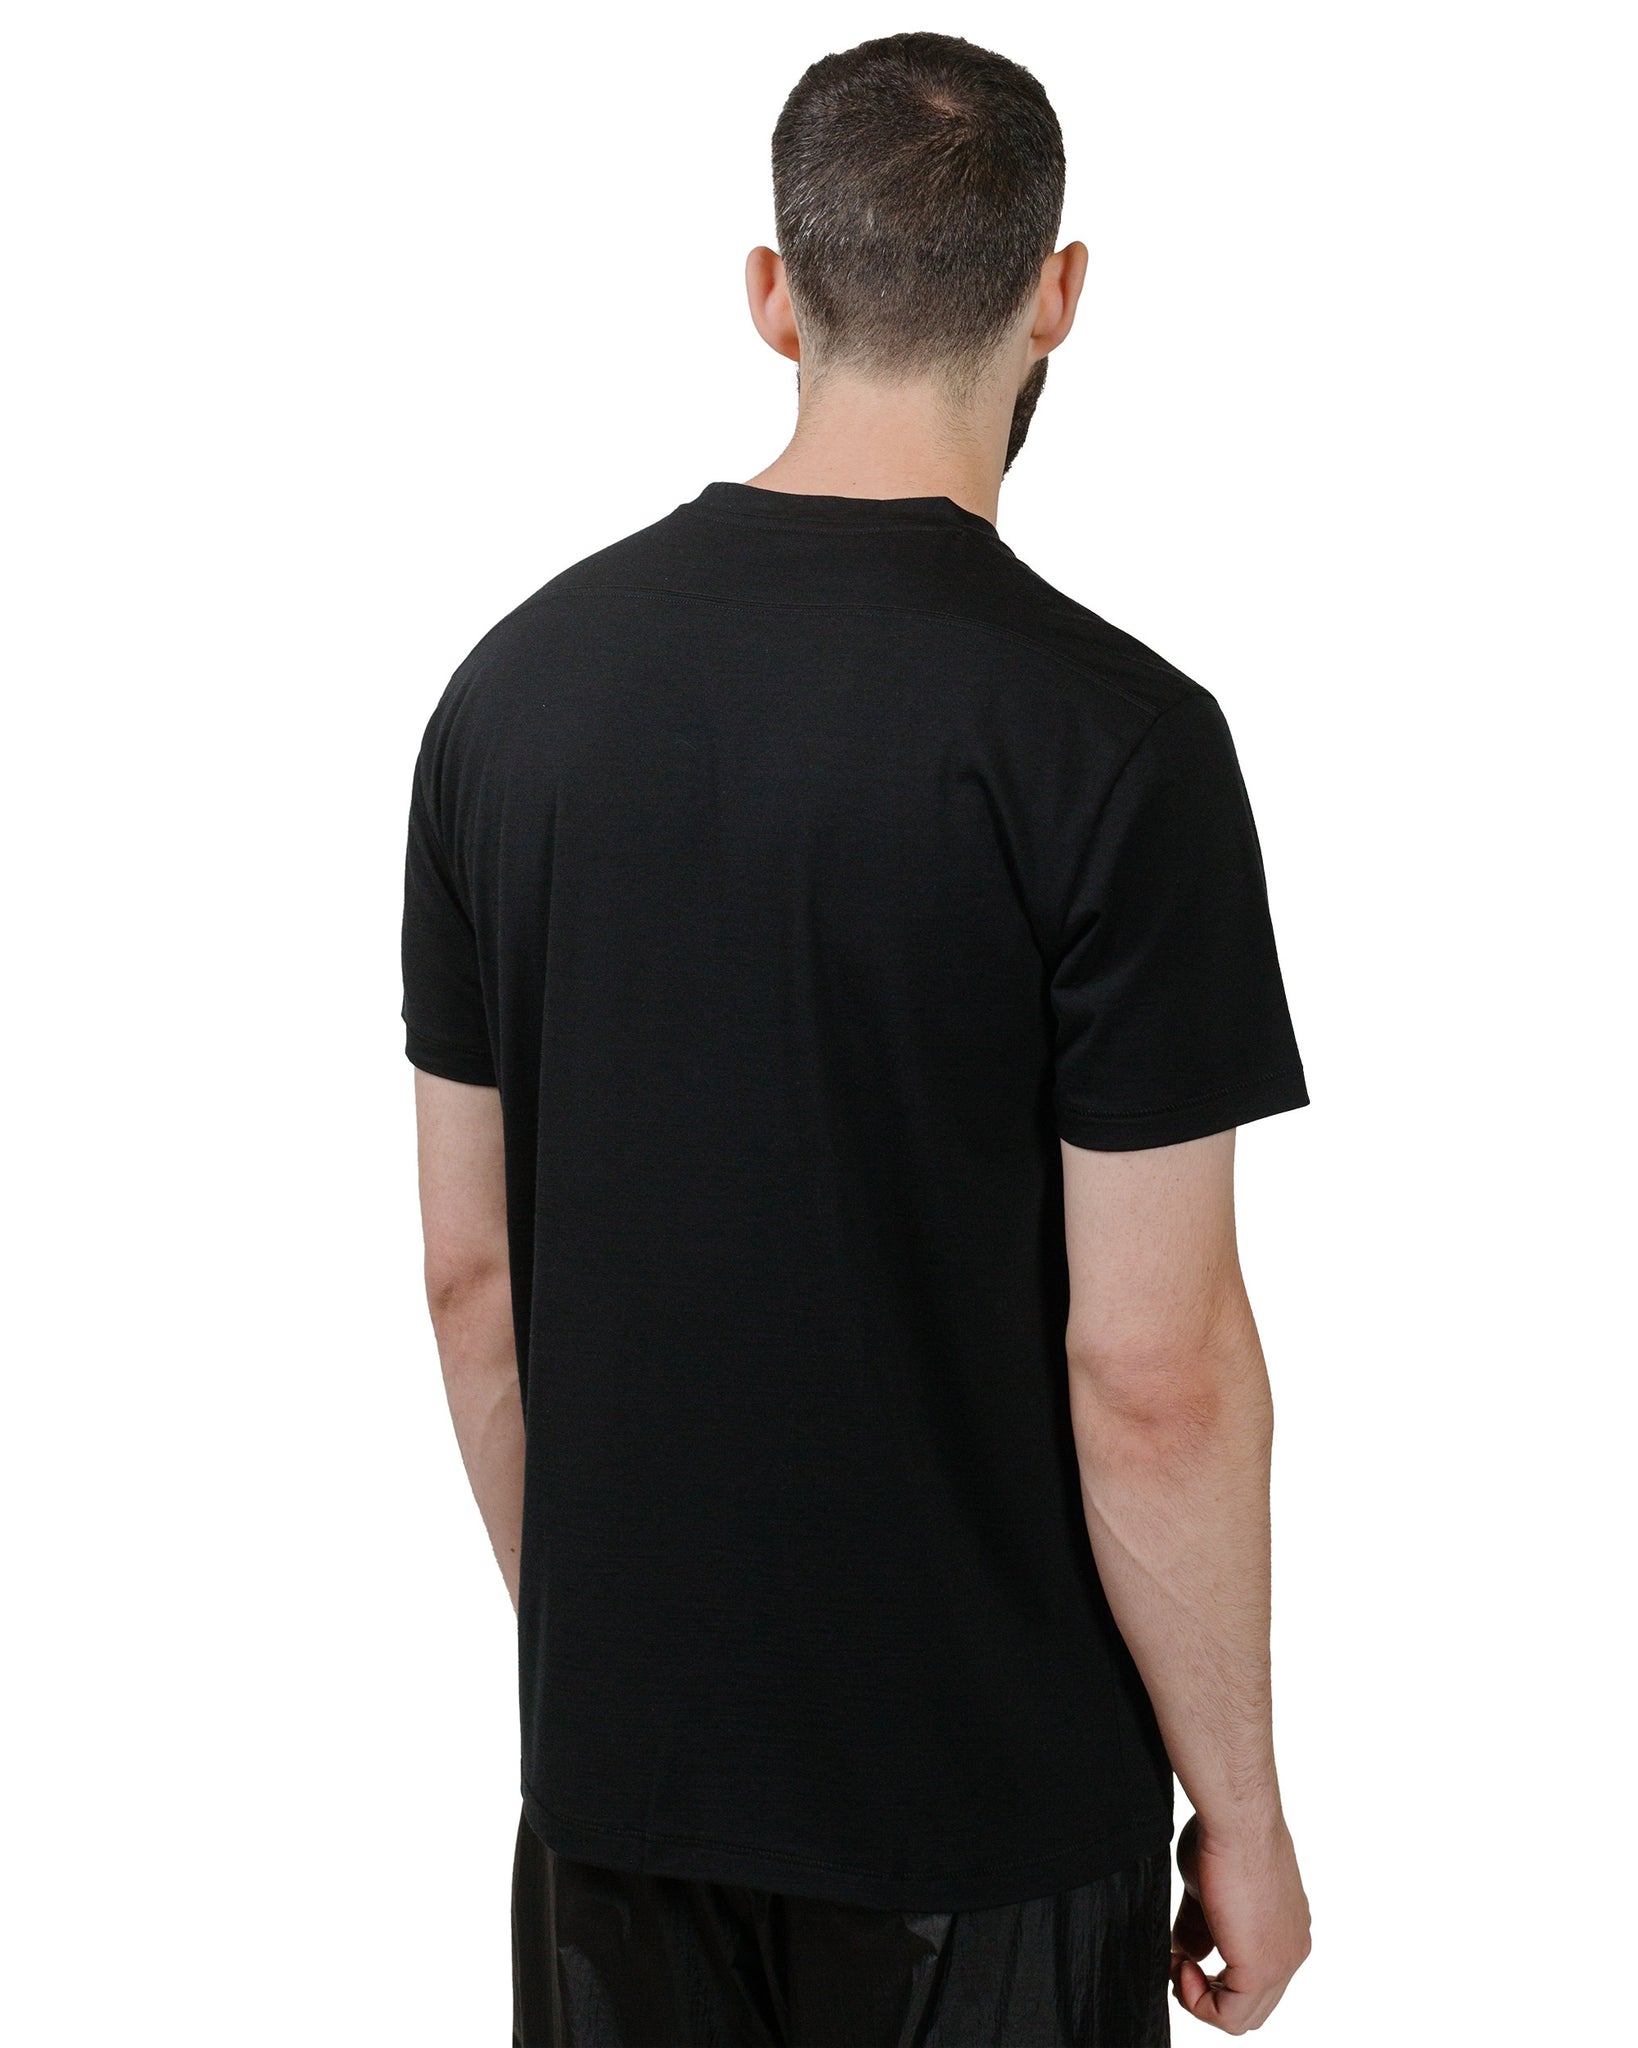 HNDSM A Better T-Shirt Black model back